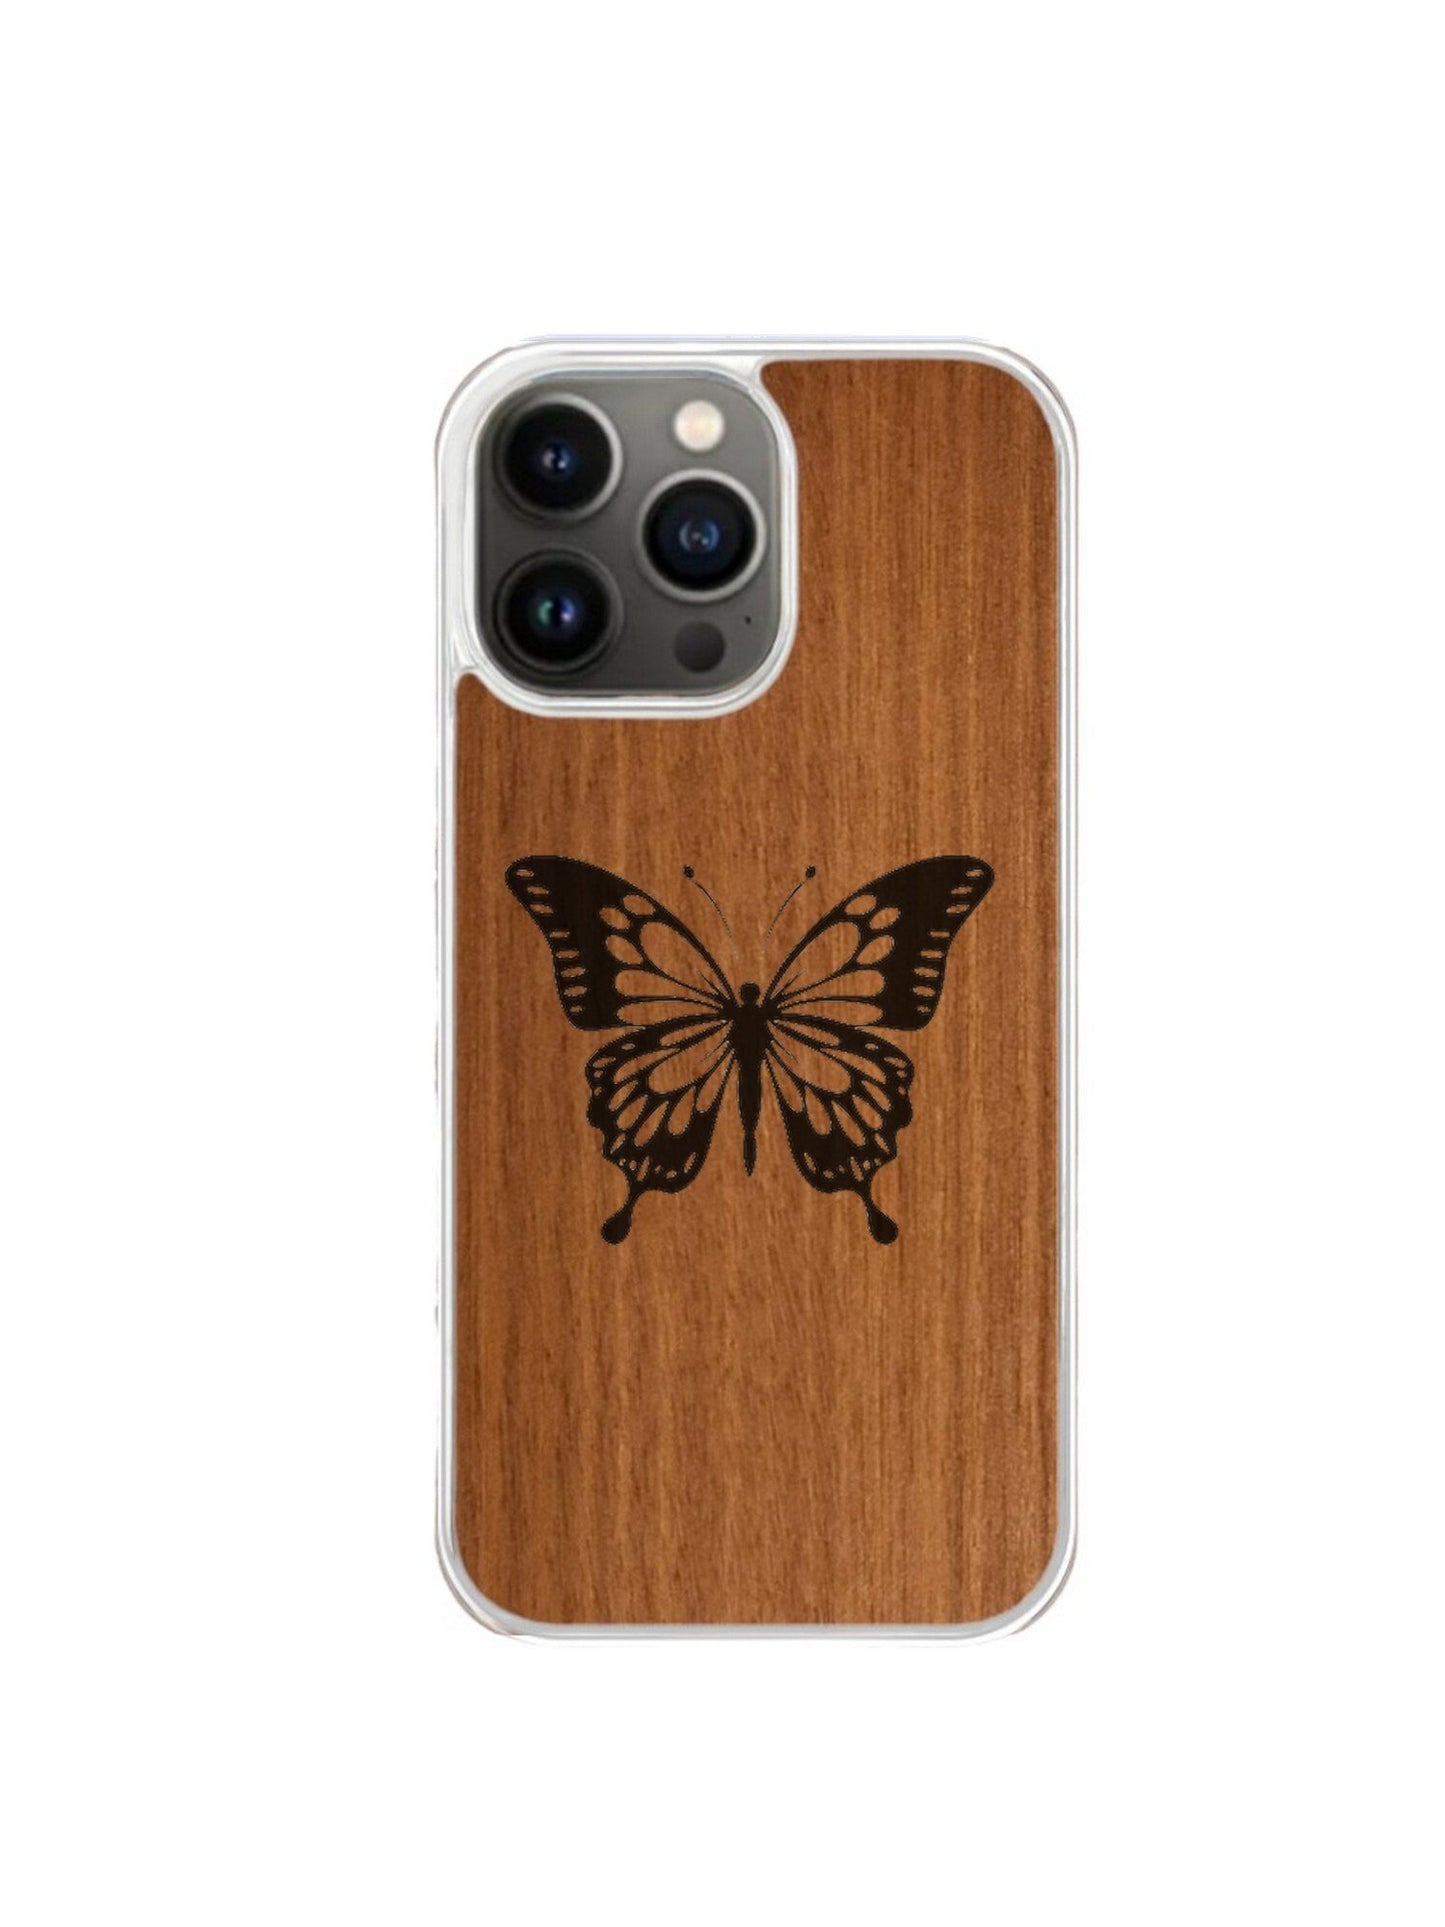 Coque Iphone transparente - Papillon